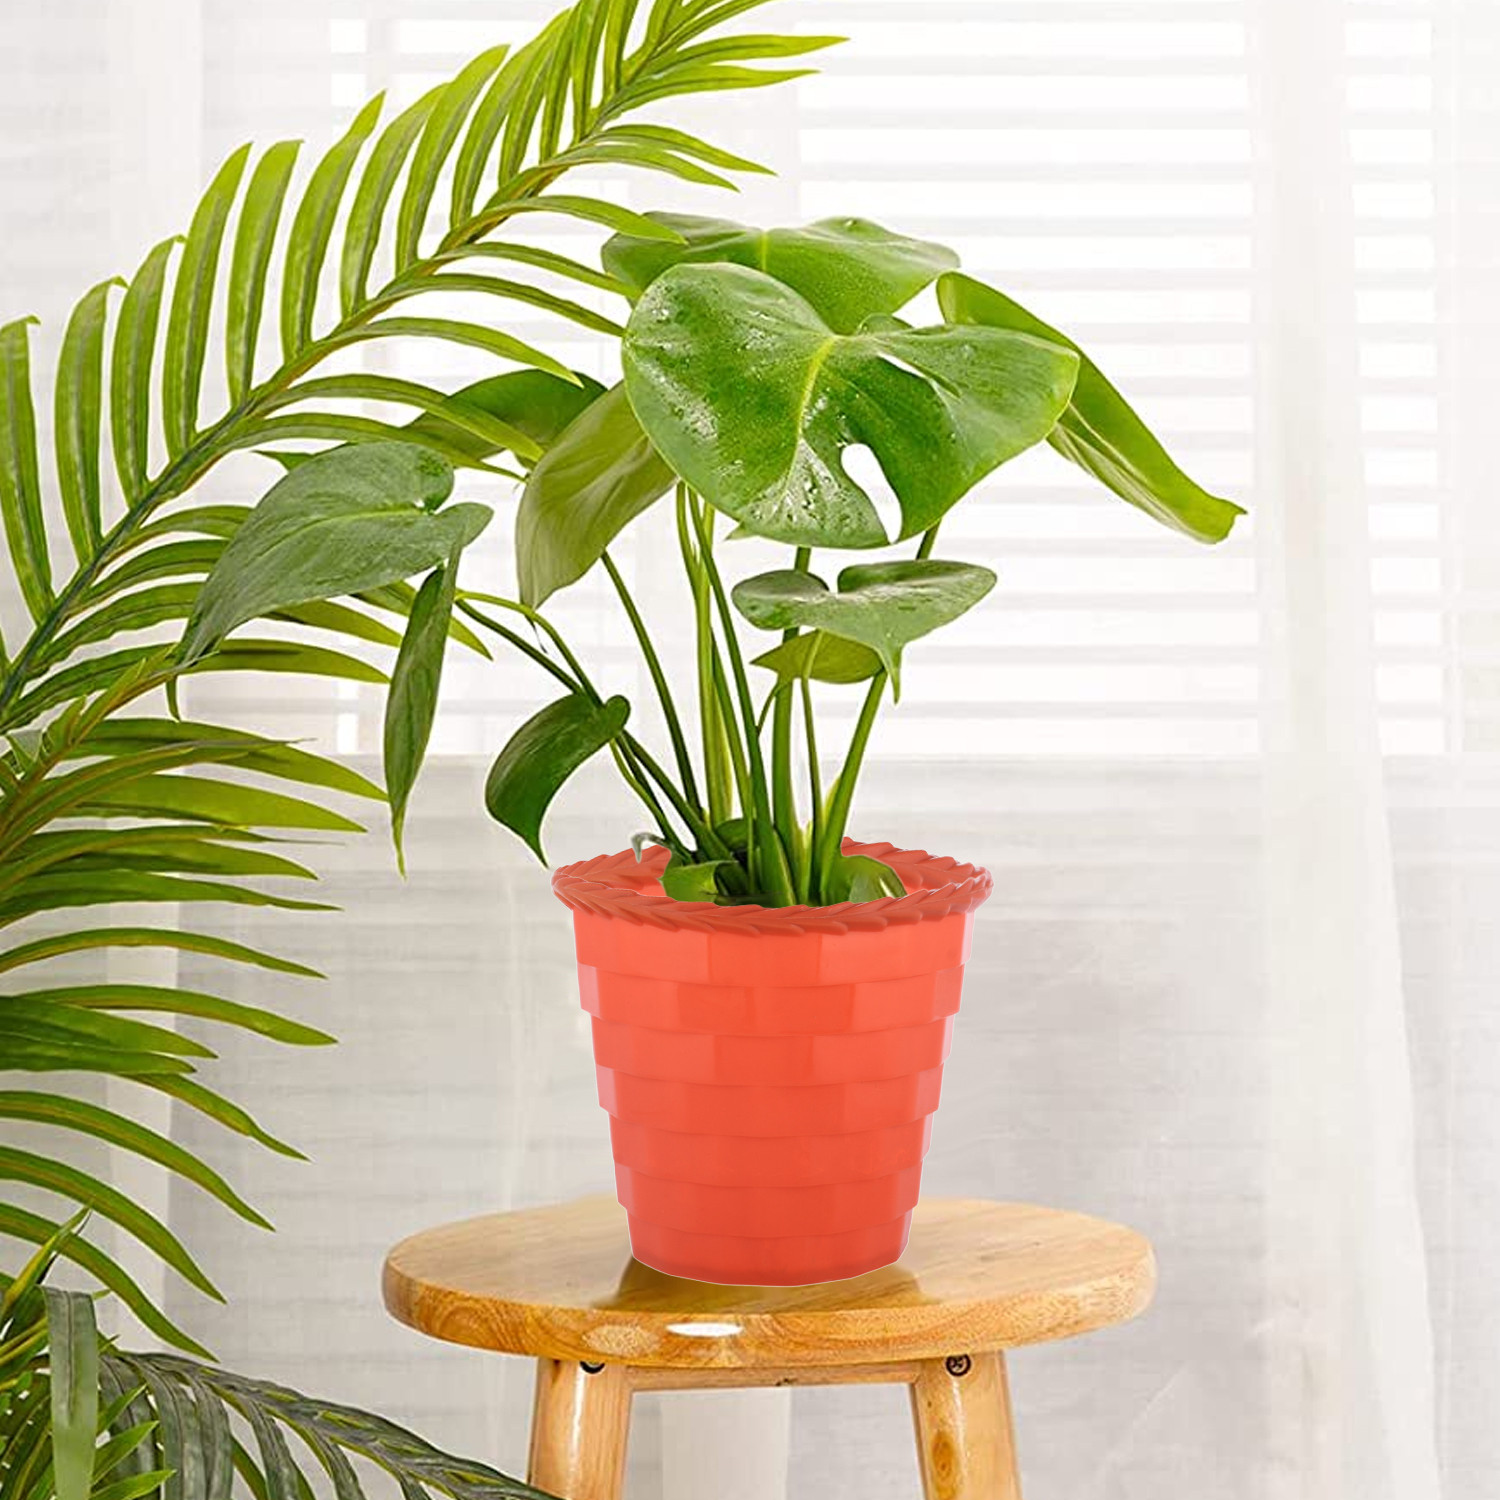 Kuber Industries Brick Flower Pot|Durable Plastic Flower Pots|Planters for Home Décor|Garden|Living Room|Balcony|6 Inch|(Orange)